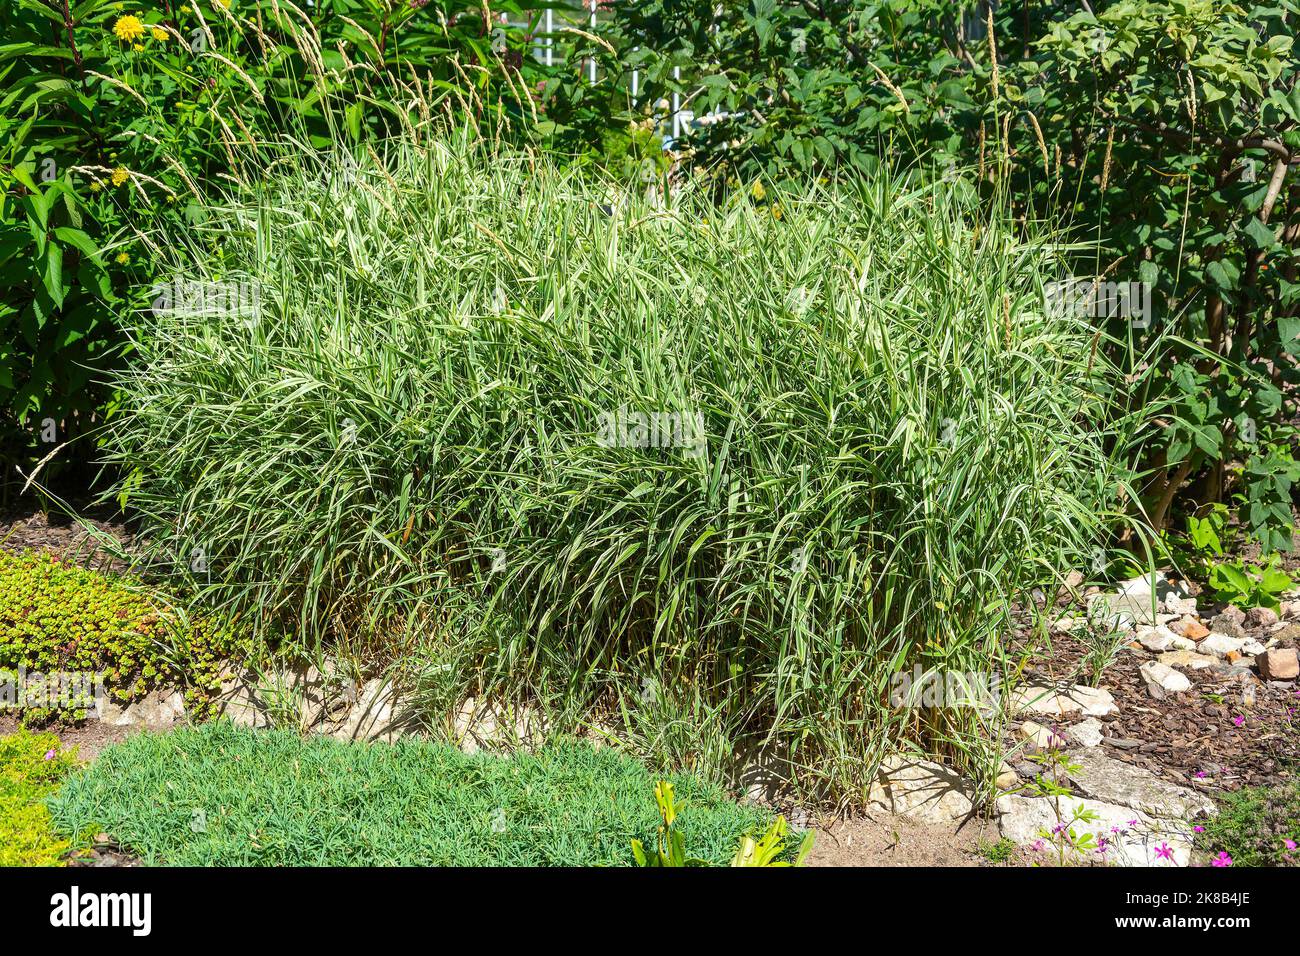 Phalaris reed, decorative garden grass for decorating wet areas Stock Photo